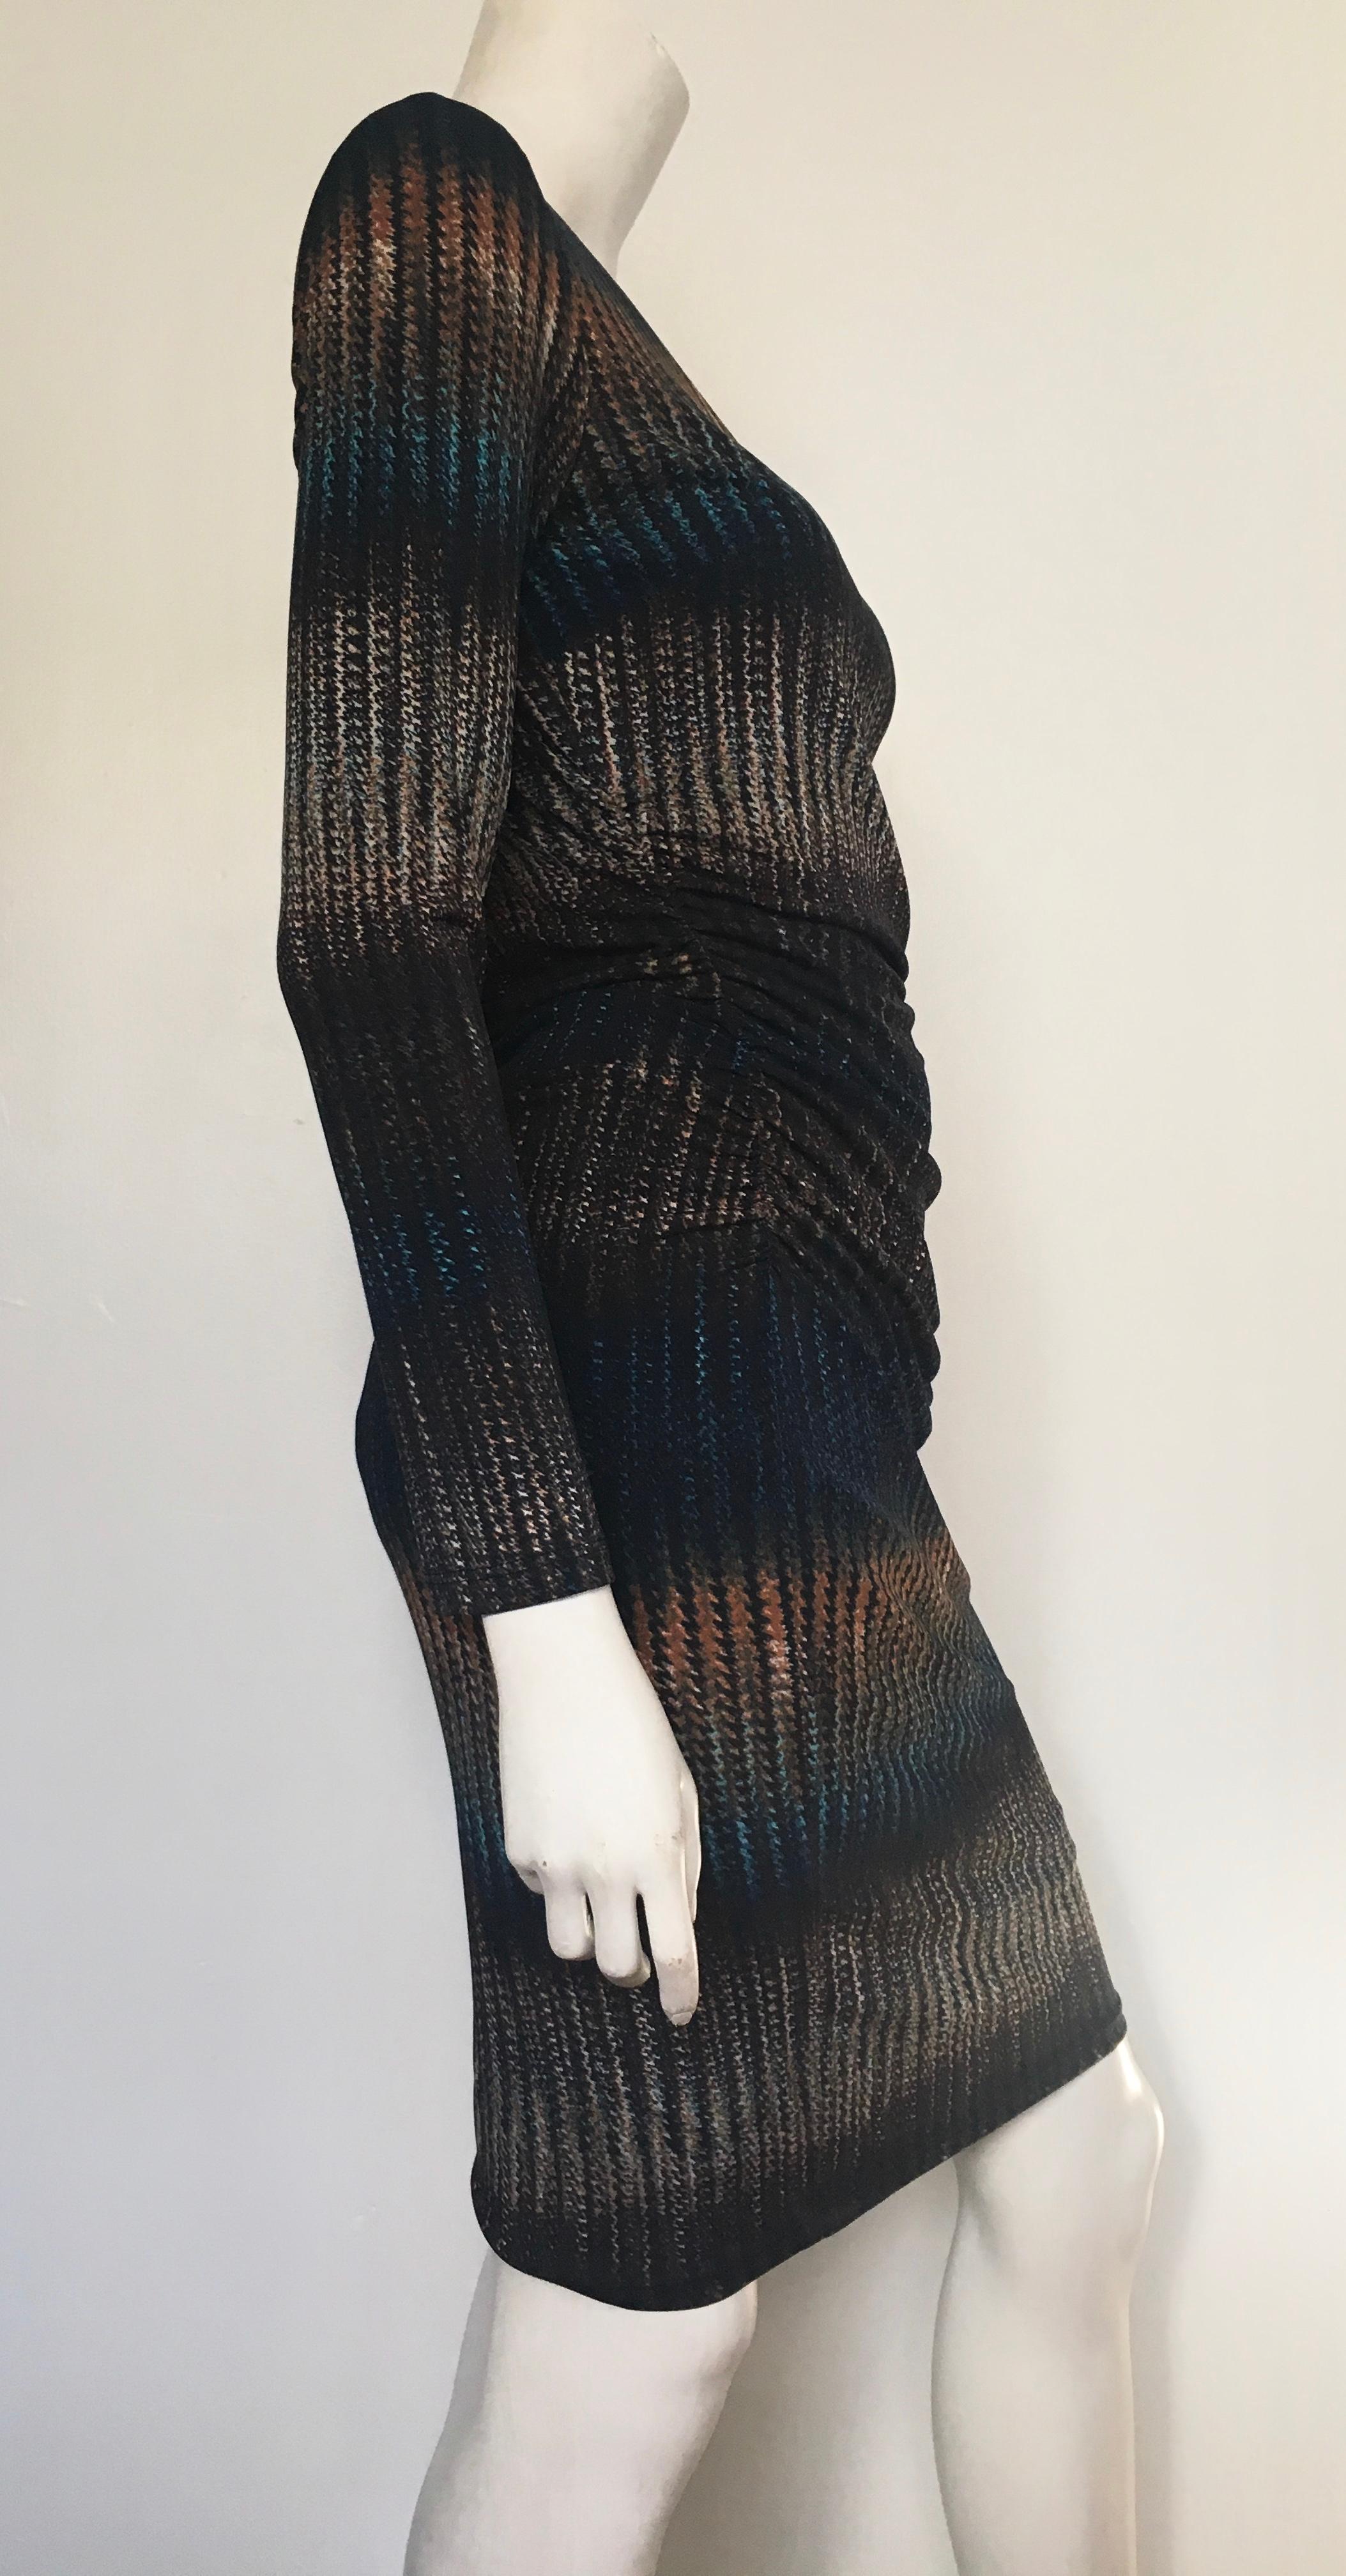 Black Badgley Mischka Sheath Ruched Dress Size 6.  Made in Canada. 